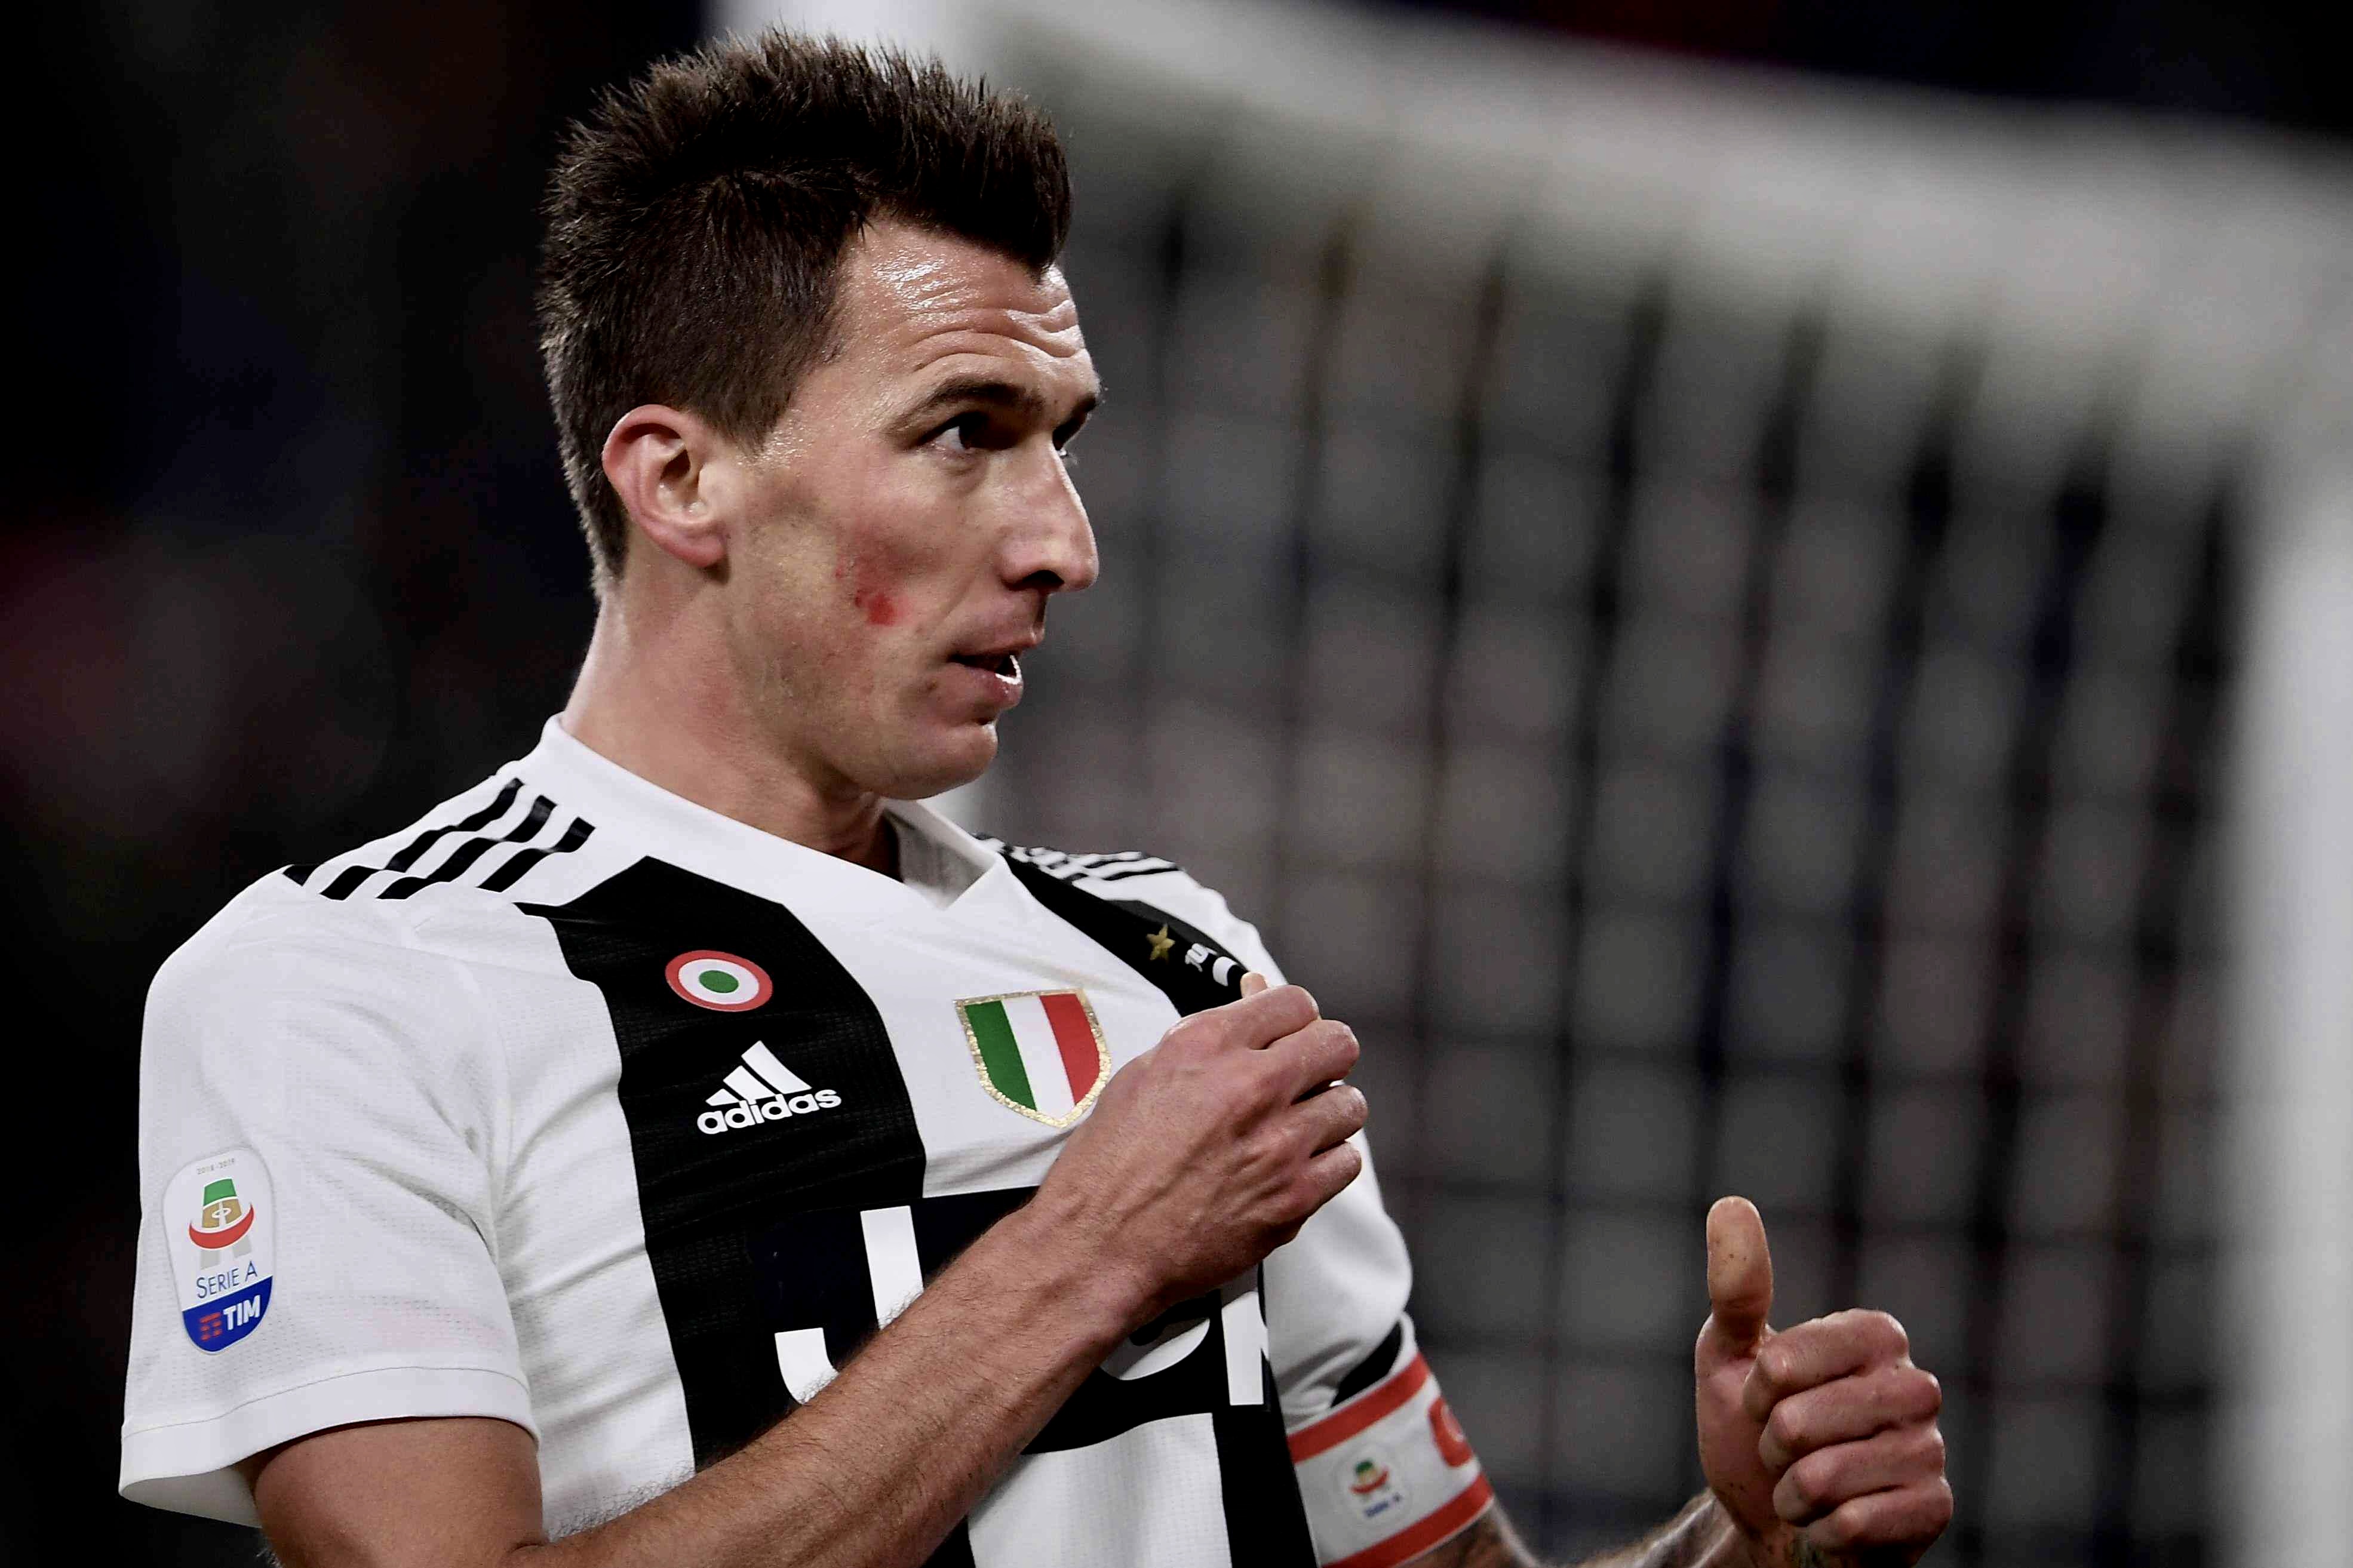 Mario Mandzukic, striker asal Kroasia hengkang dari Juventus dan bergabung klub asal Qatar Al-Duhail. (Foto: thesefootballtimes.co)